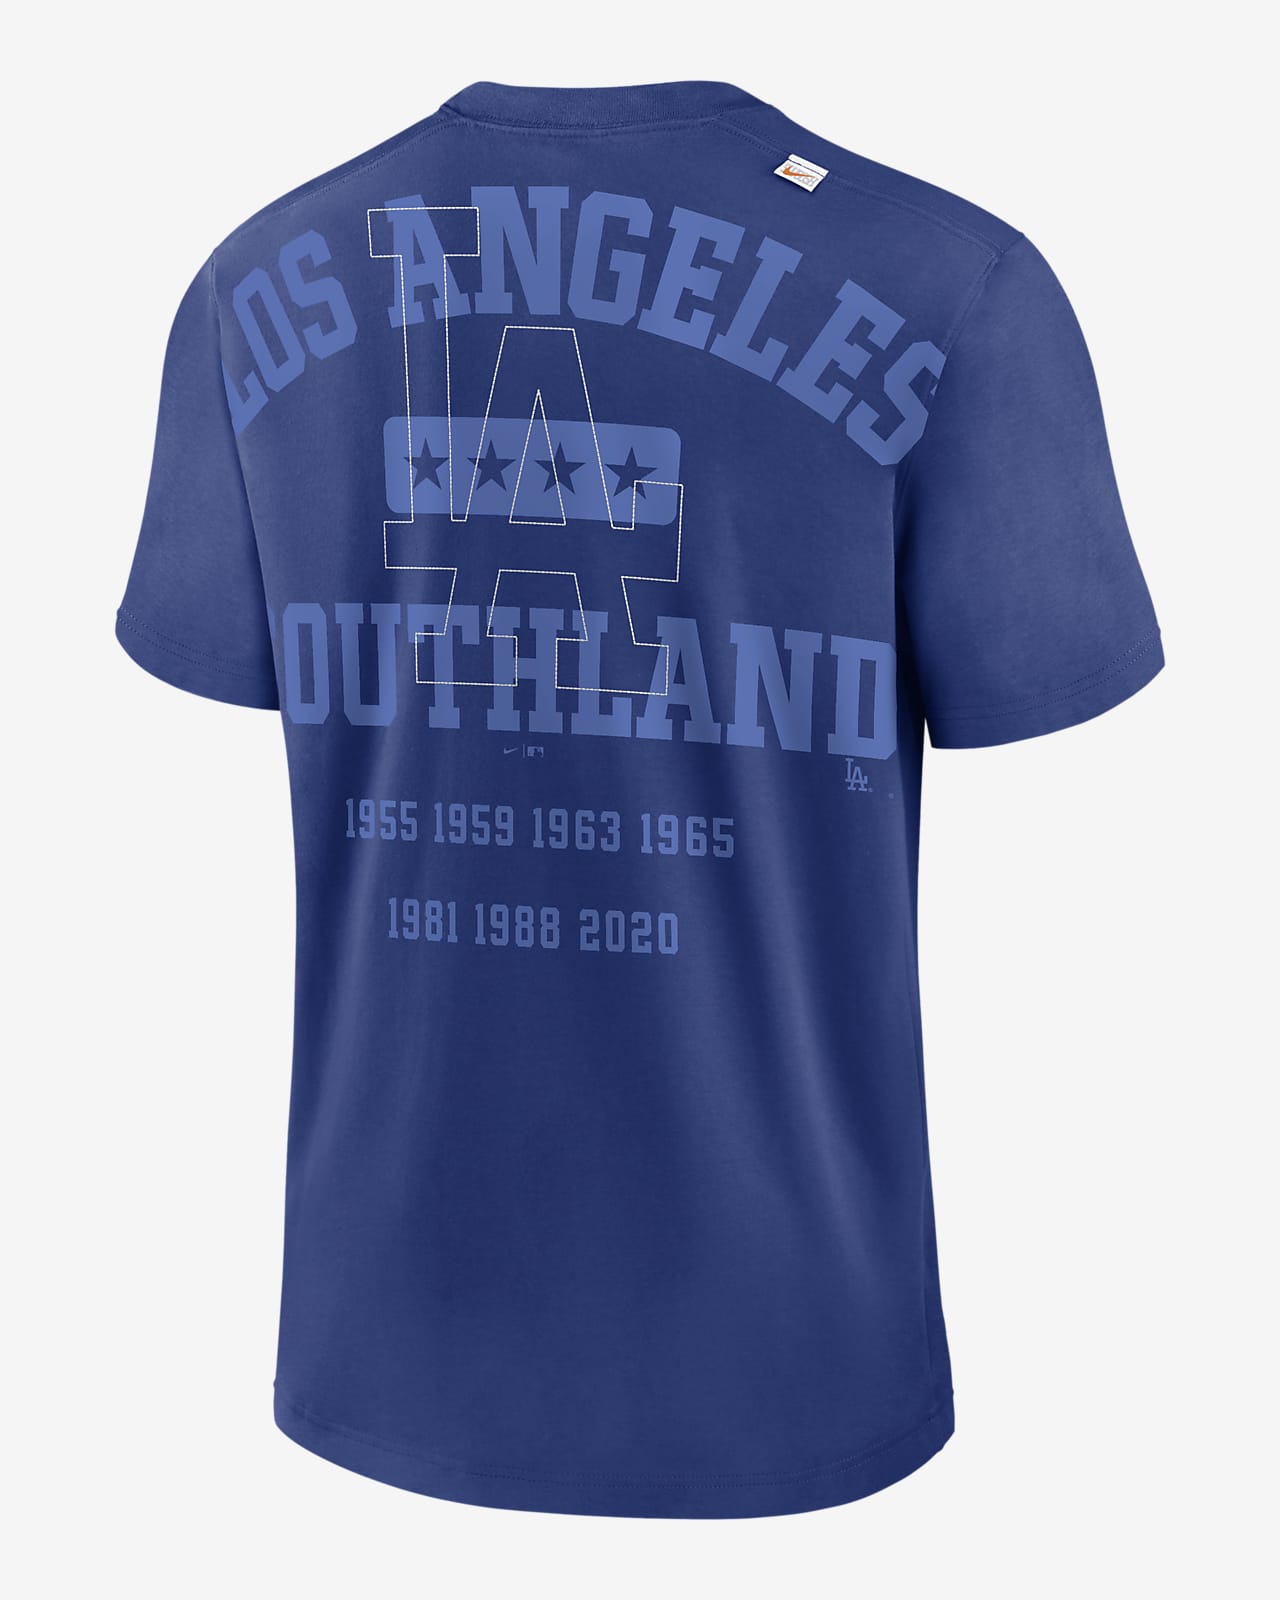 1988 DODGERS Shirt Baseball T Shirt LA Dodgers TShirt Los Angeles